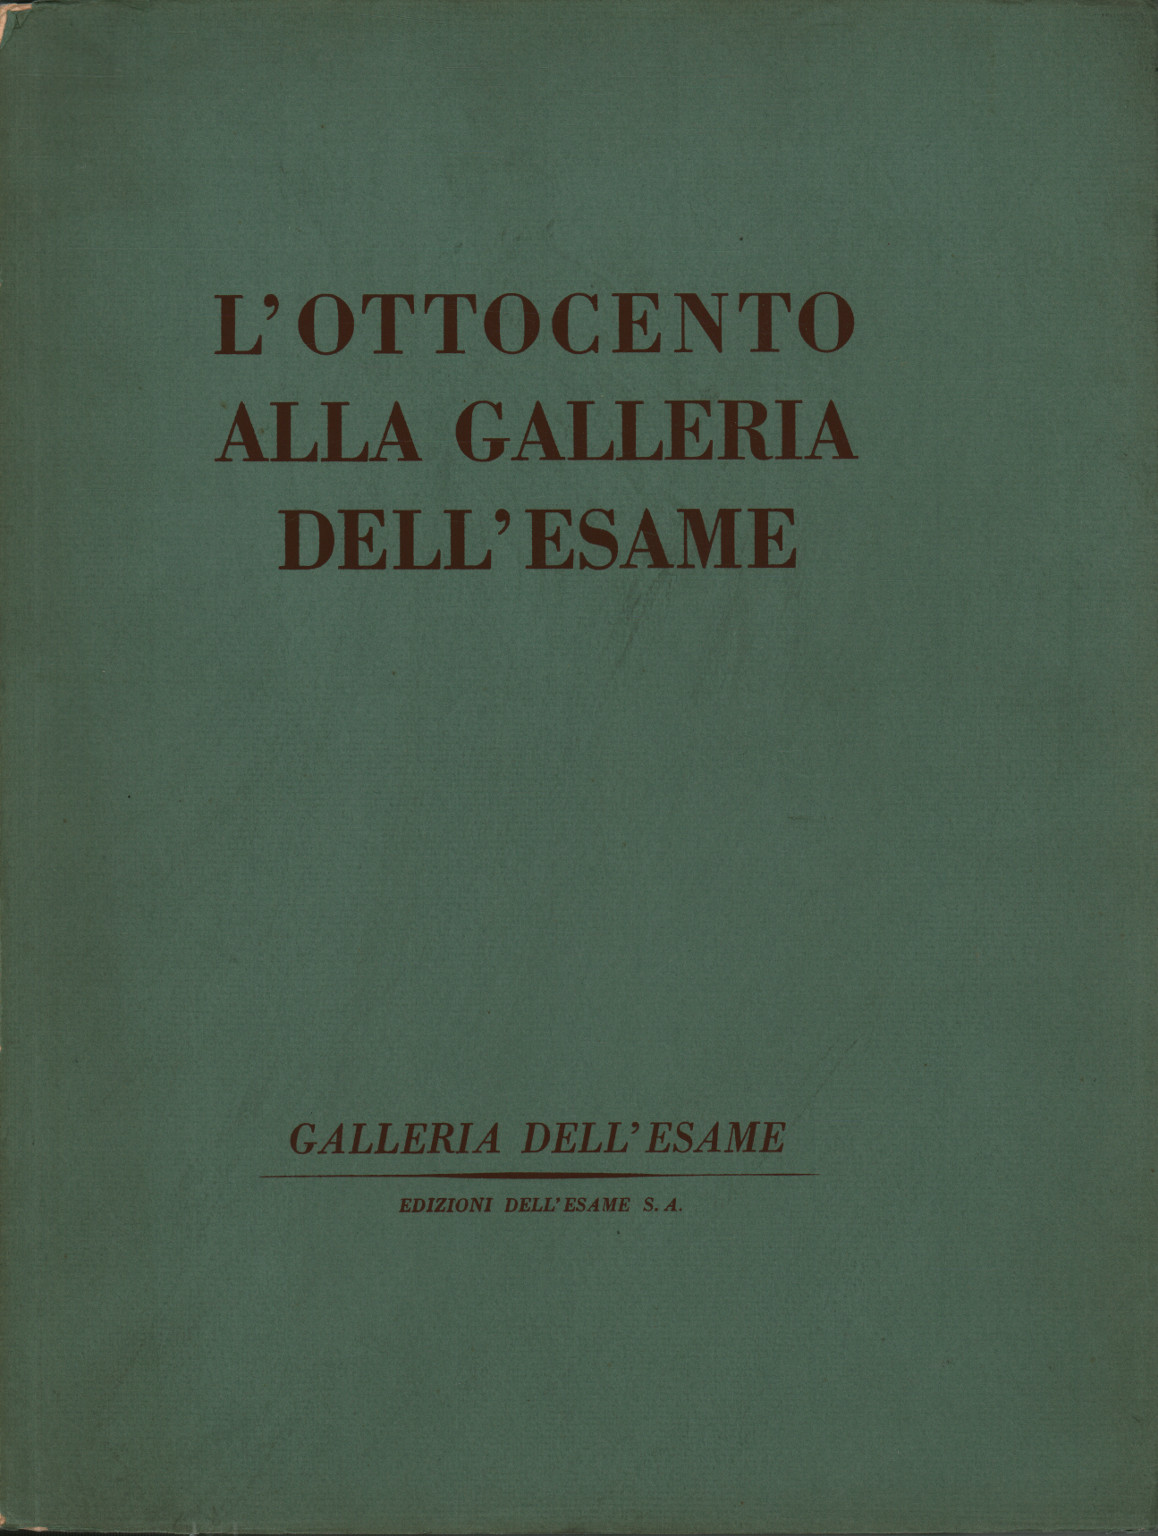 Le XIXe siècle à la Galleria dell'esame, s.a.